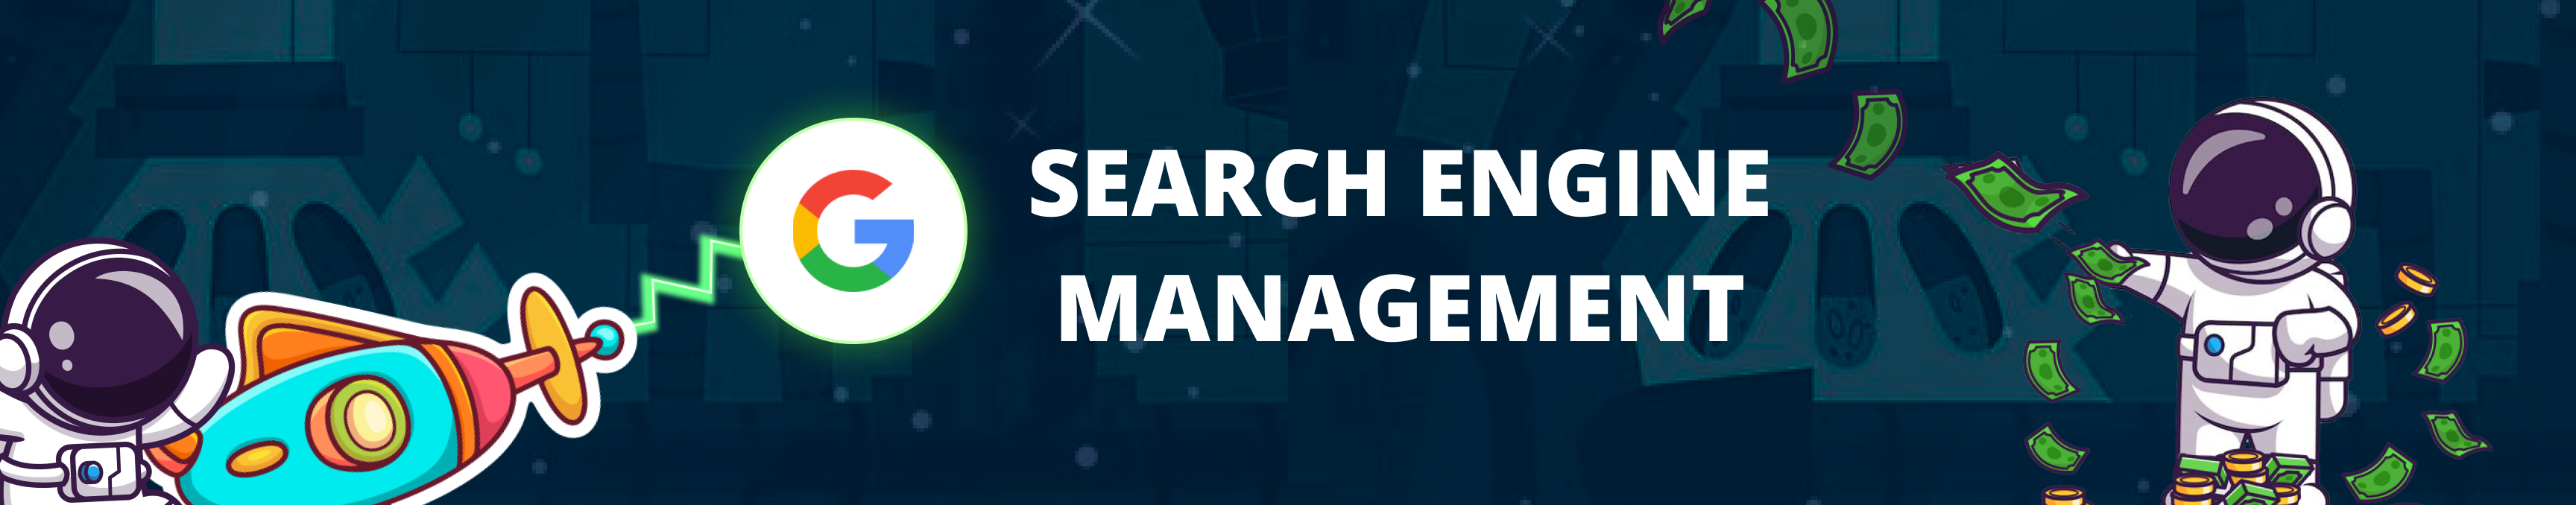 Search Engine Management, Creative Digital Marketing Company, Auxost